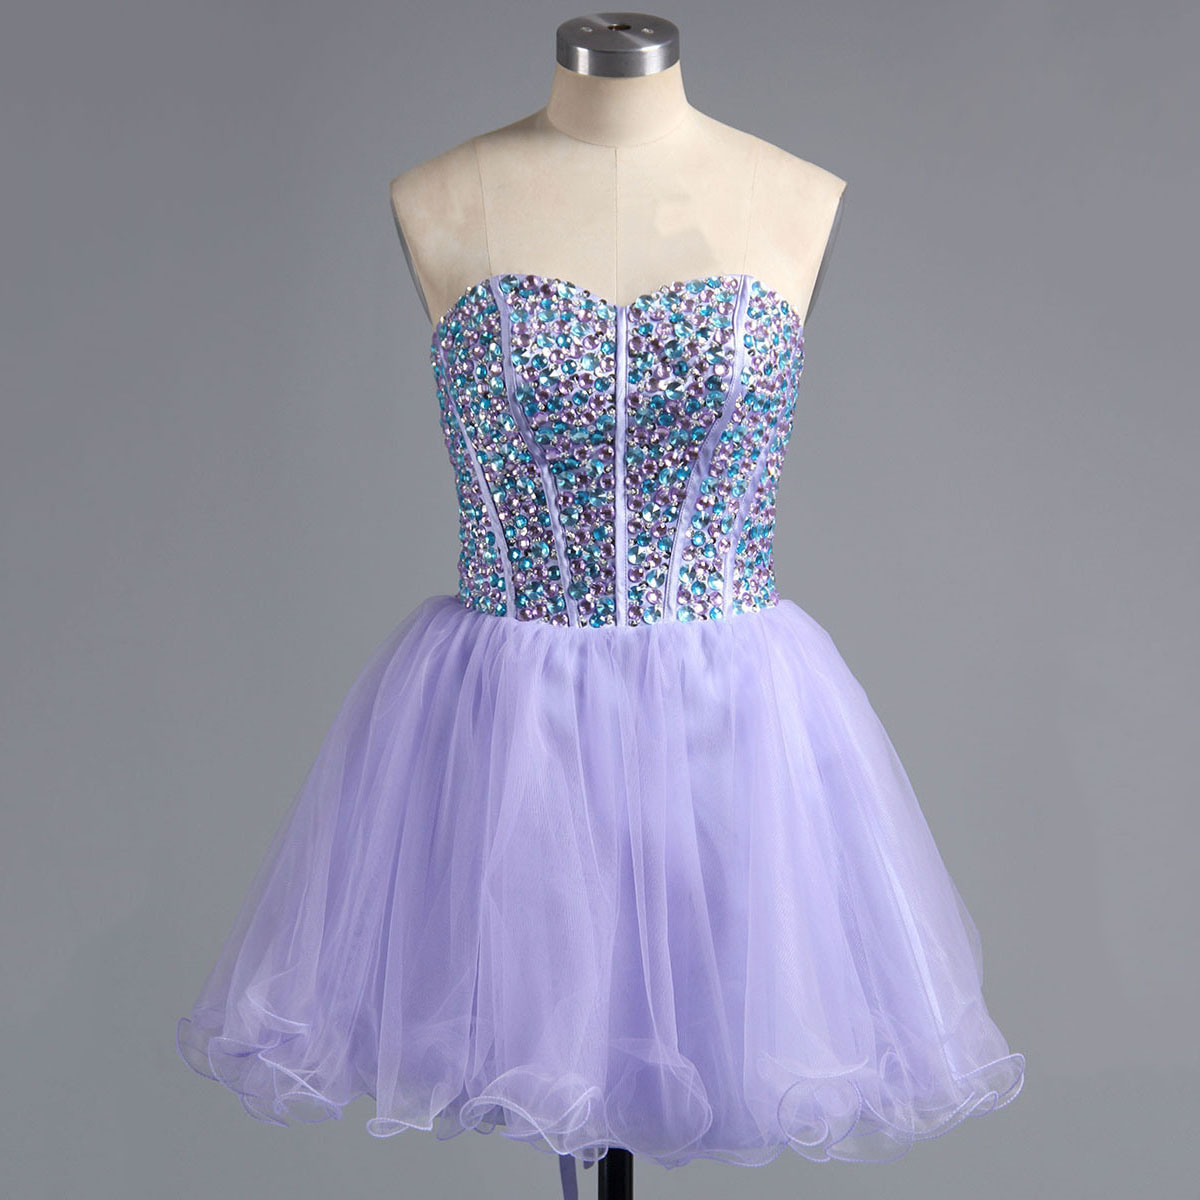 Purple Cocktail Dress, Sweetheart Neckline Graduation Dress, Crystal Embellished Evening Dress, A-line Short Homecoming Dress